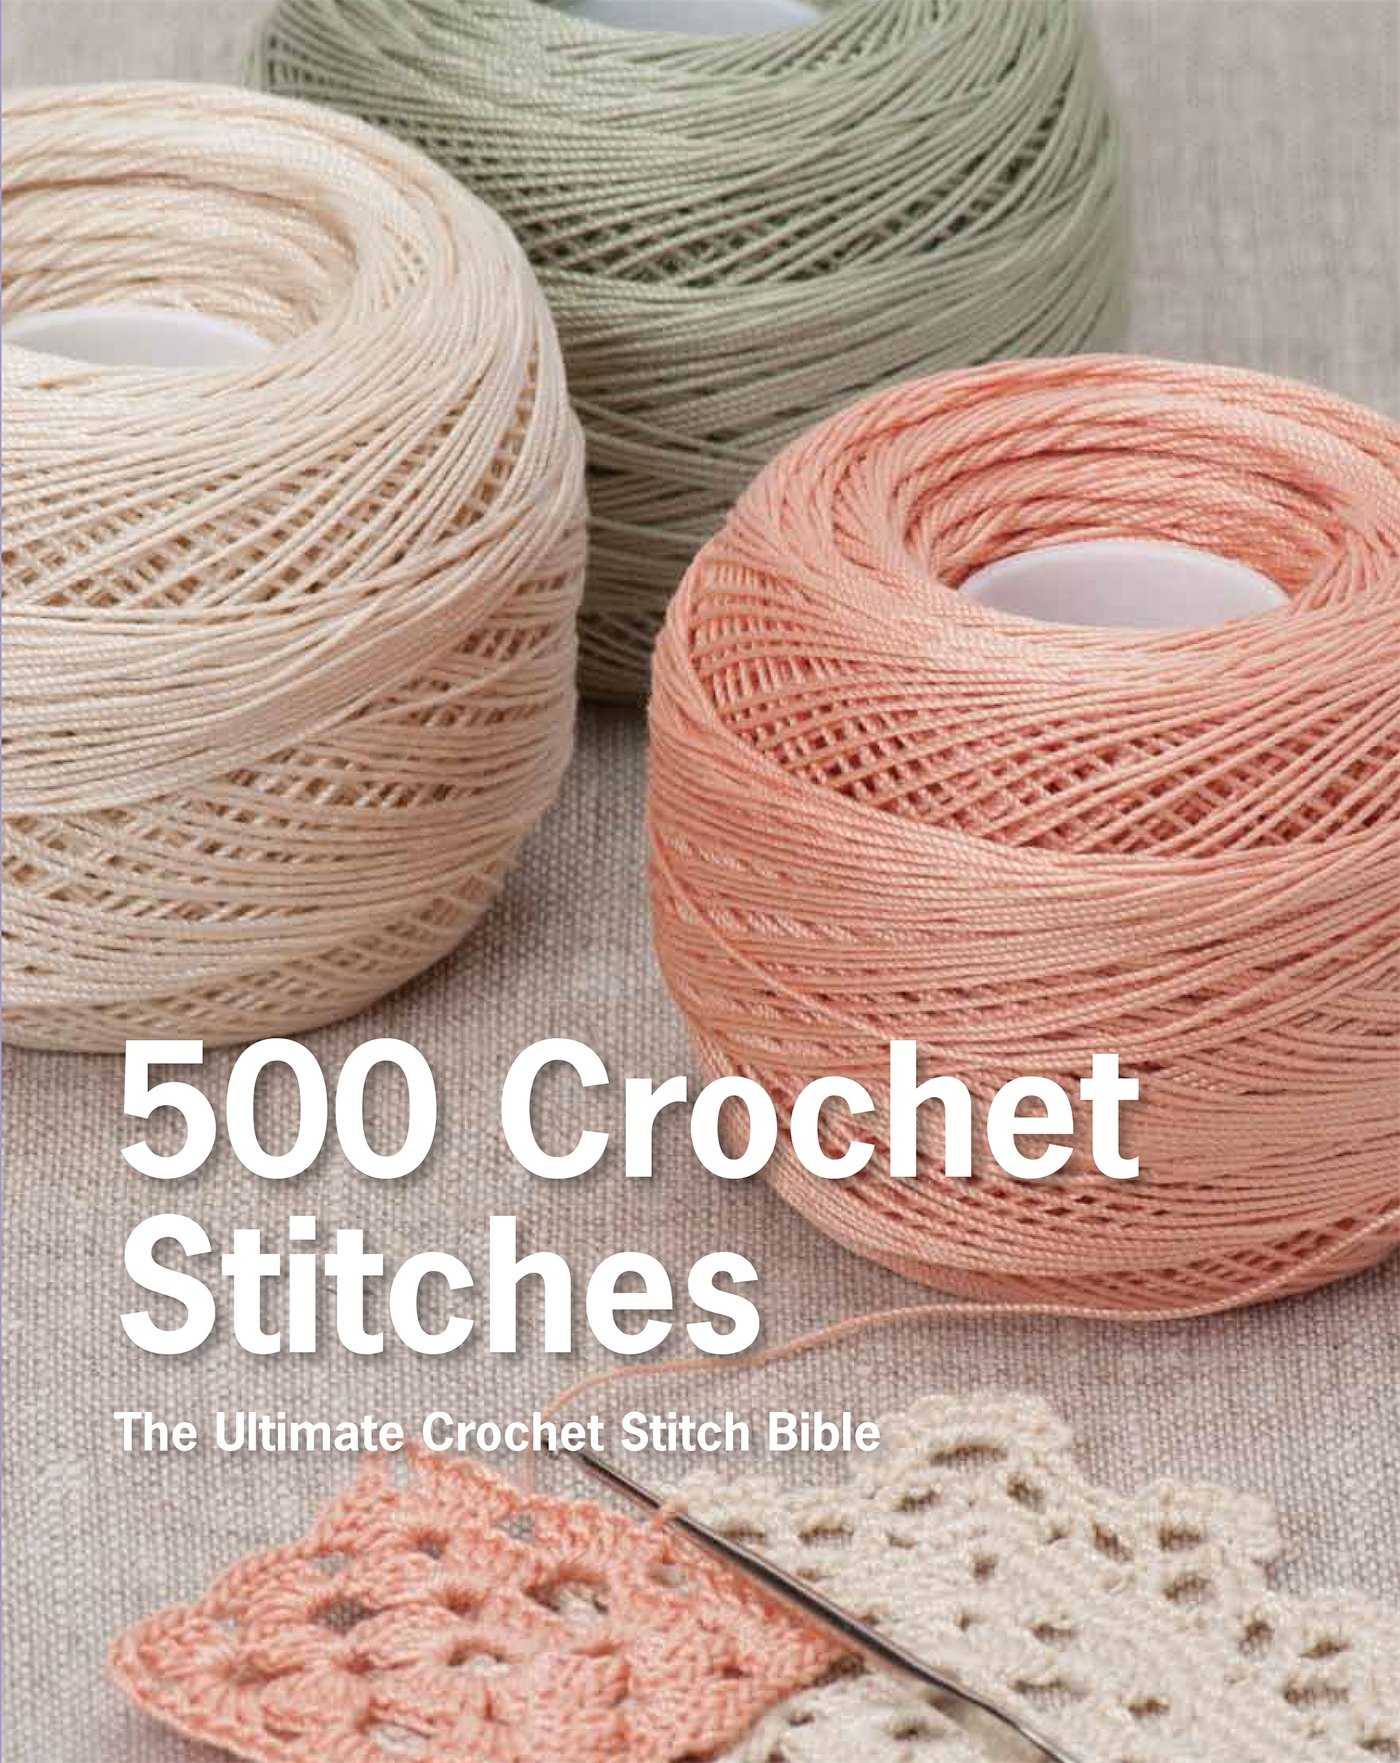 crochet stitch instructions pdf